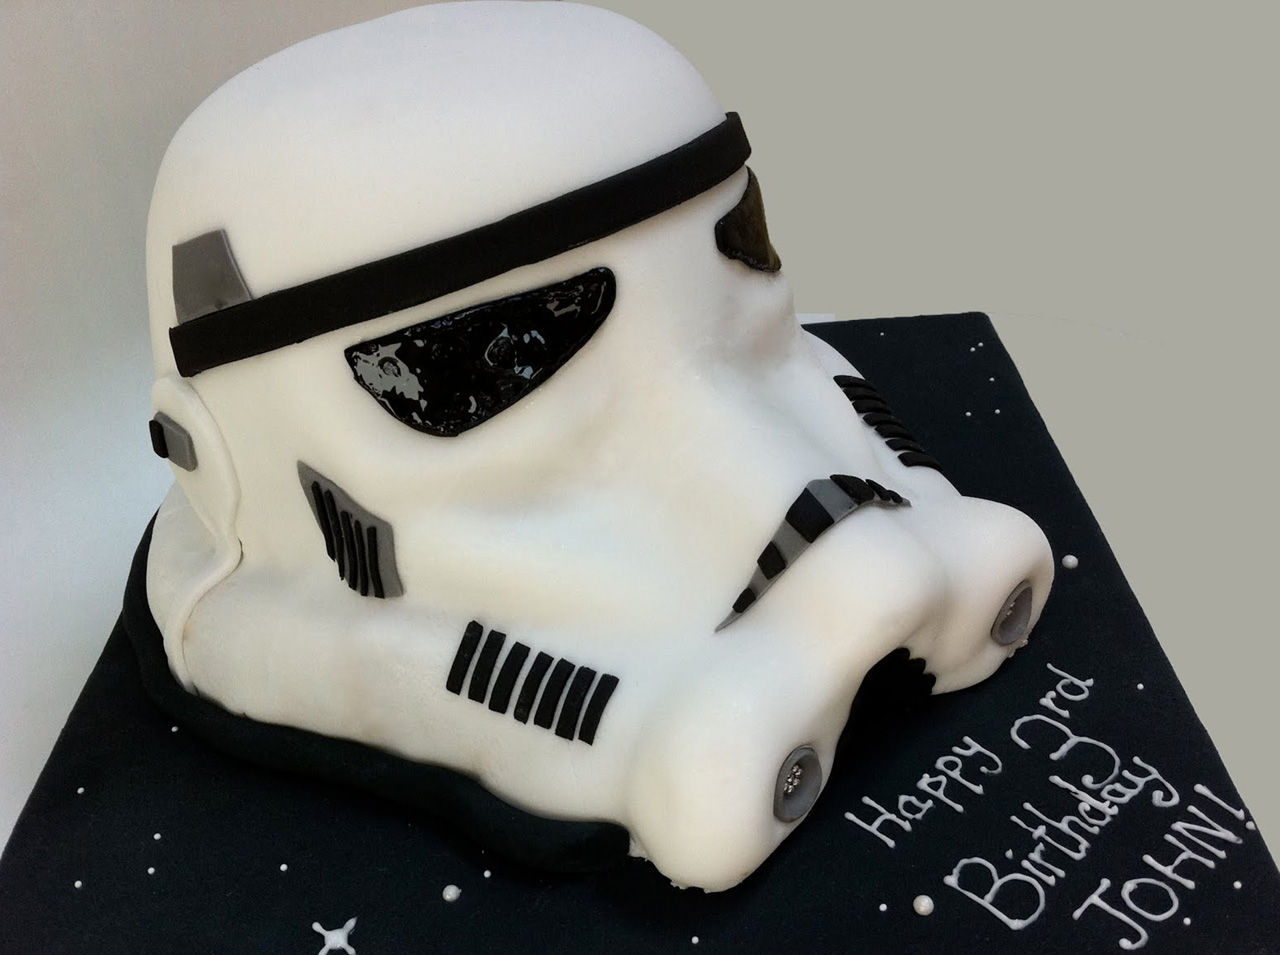 Storm Trooper Helmet Cake